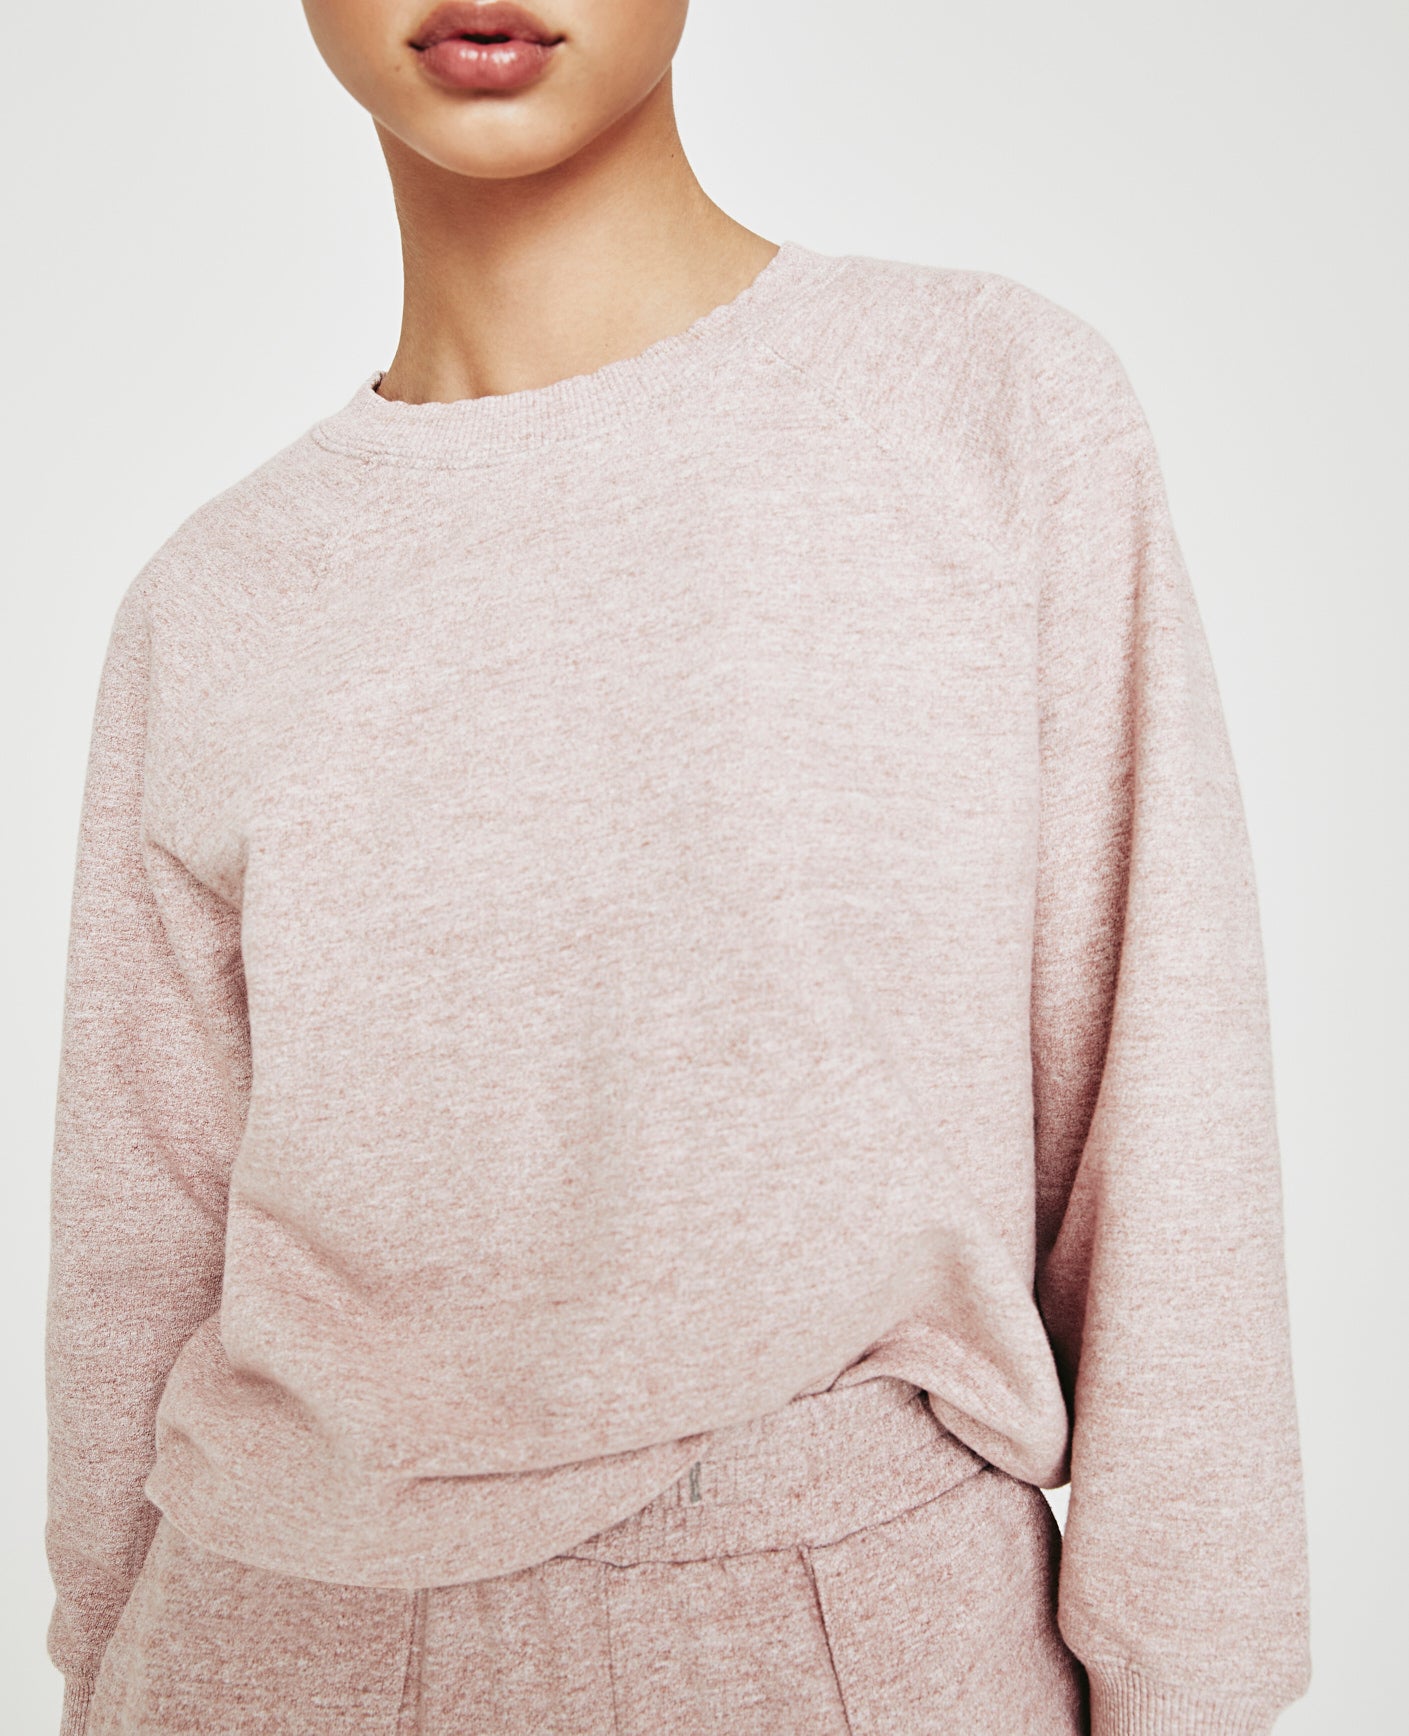 Jadyn Sweatshirt Heather Pink Vintage Sweatshirt Women Tops Photo 3